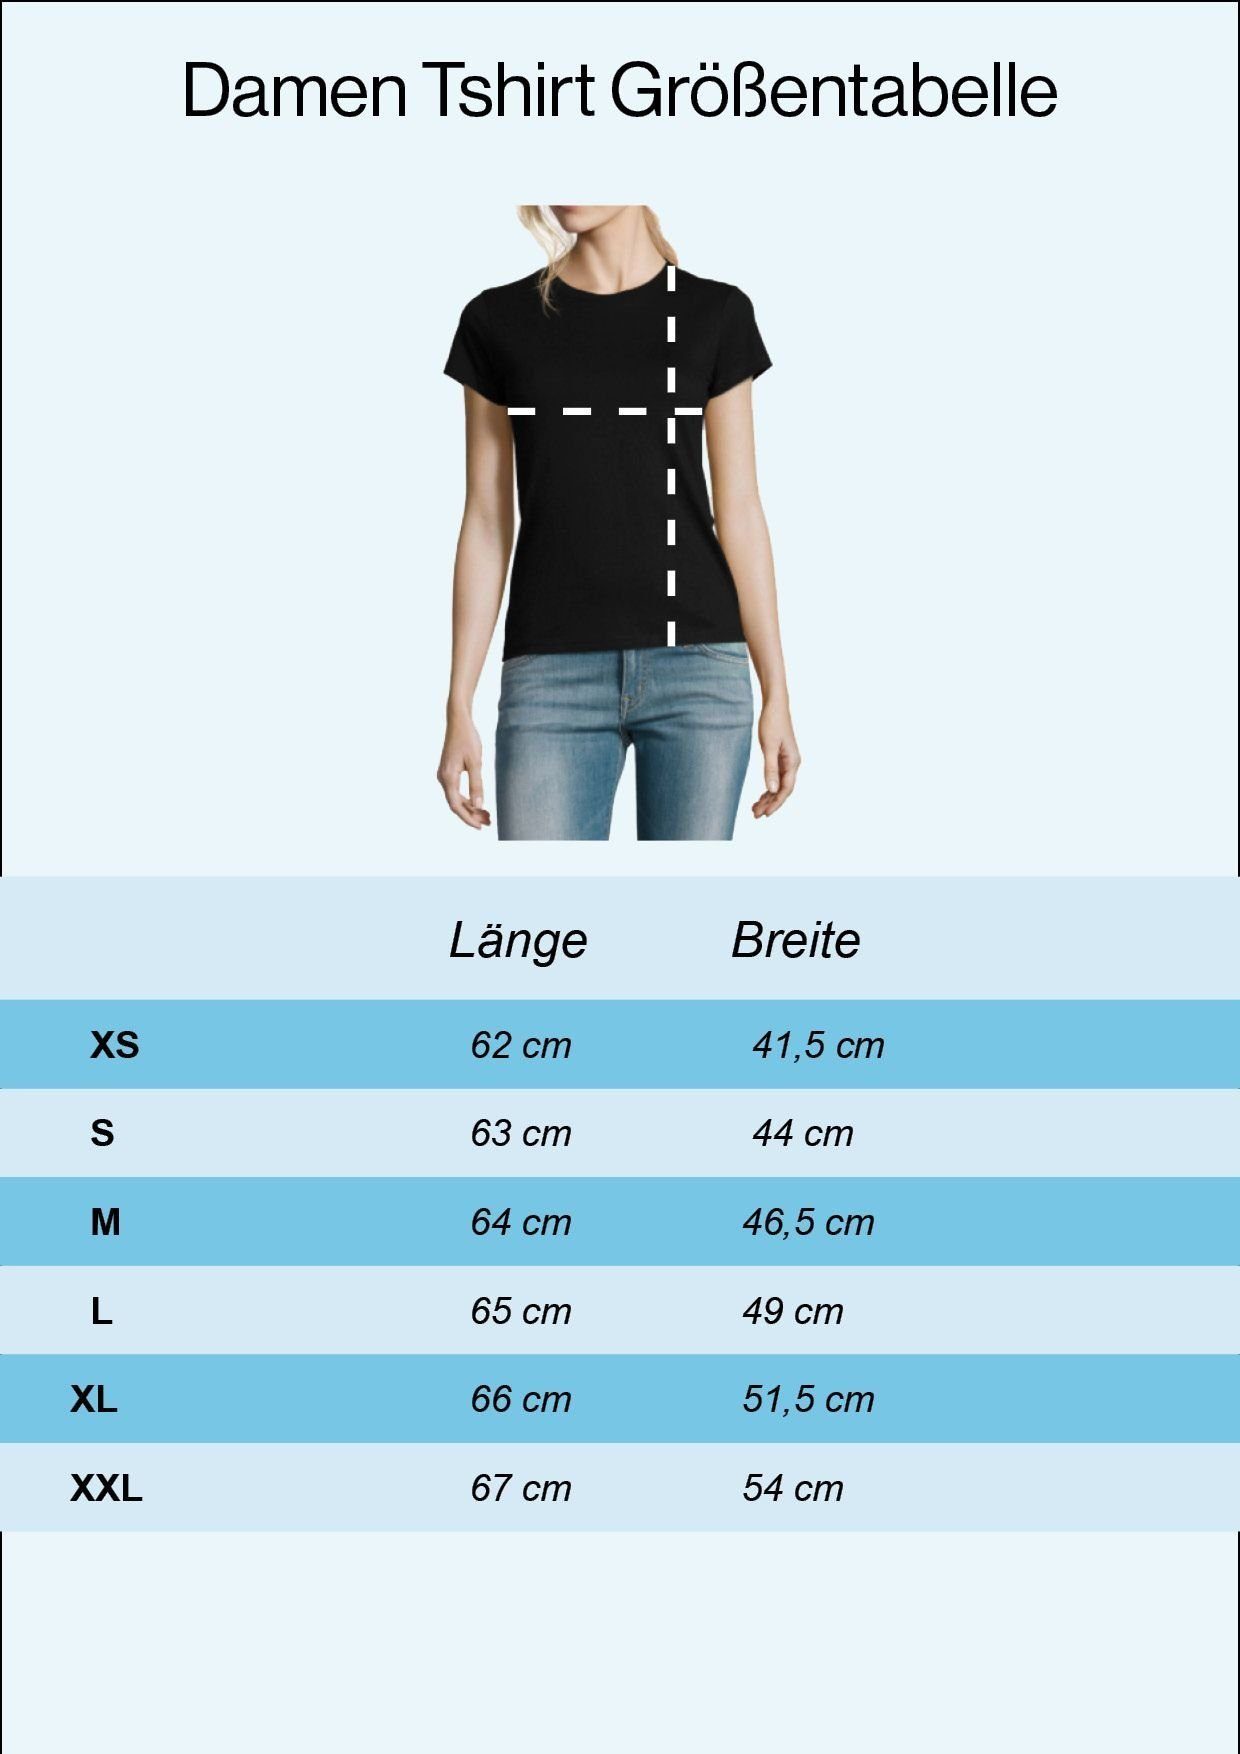 Designz Youth Royalblau witzigem T-Shirt Zauberwürfel mit Frontprint Shirt Damen